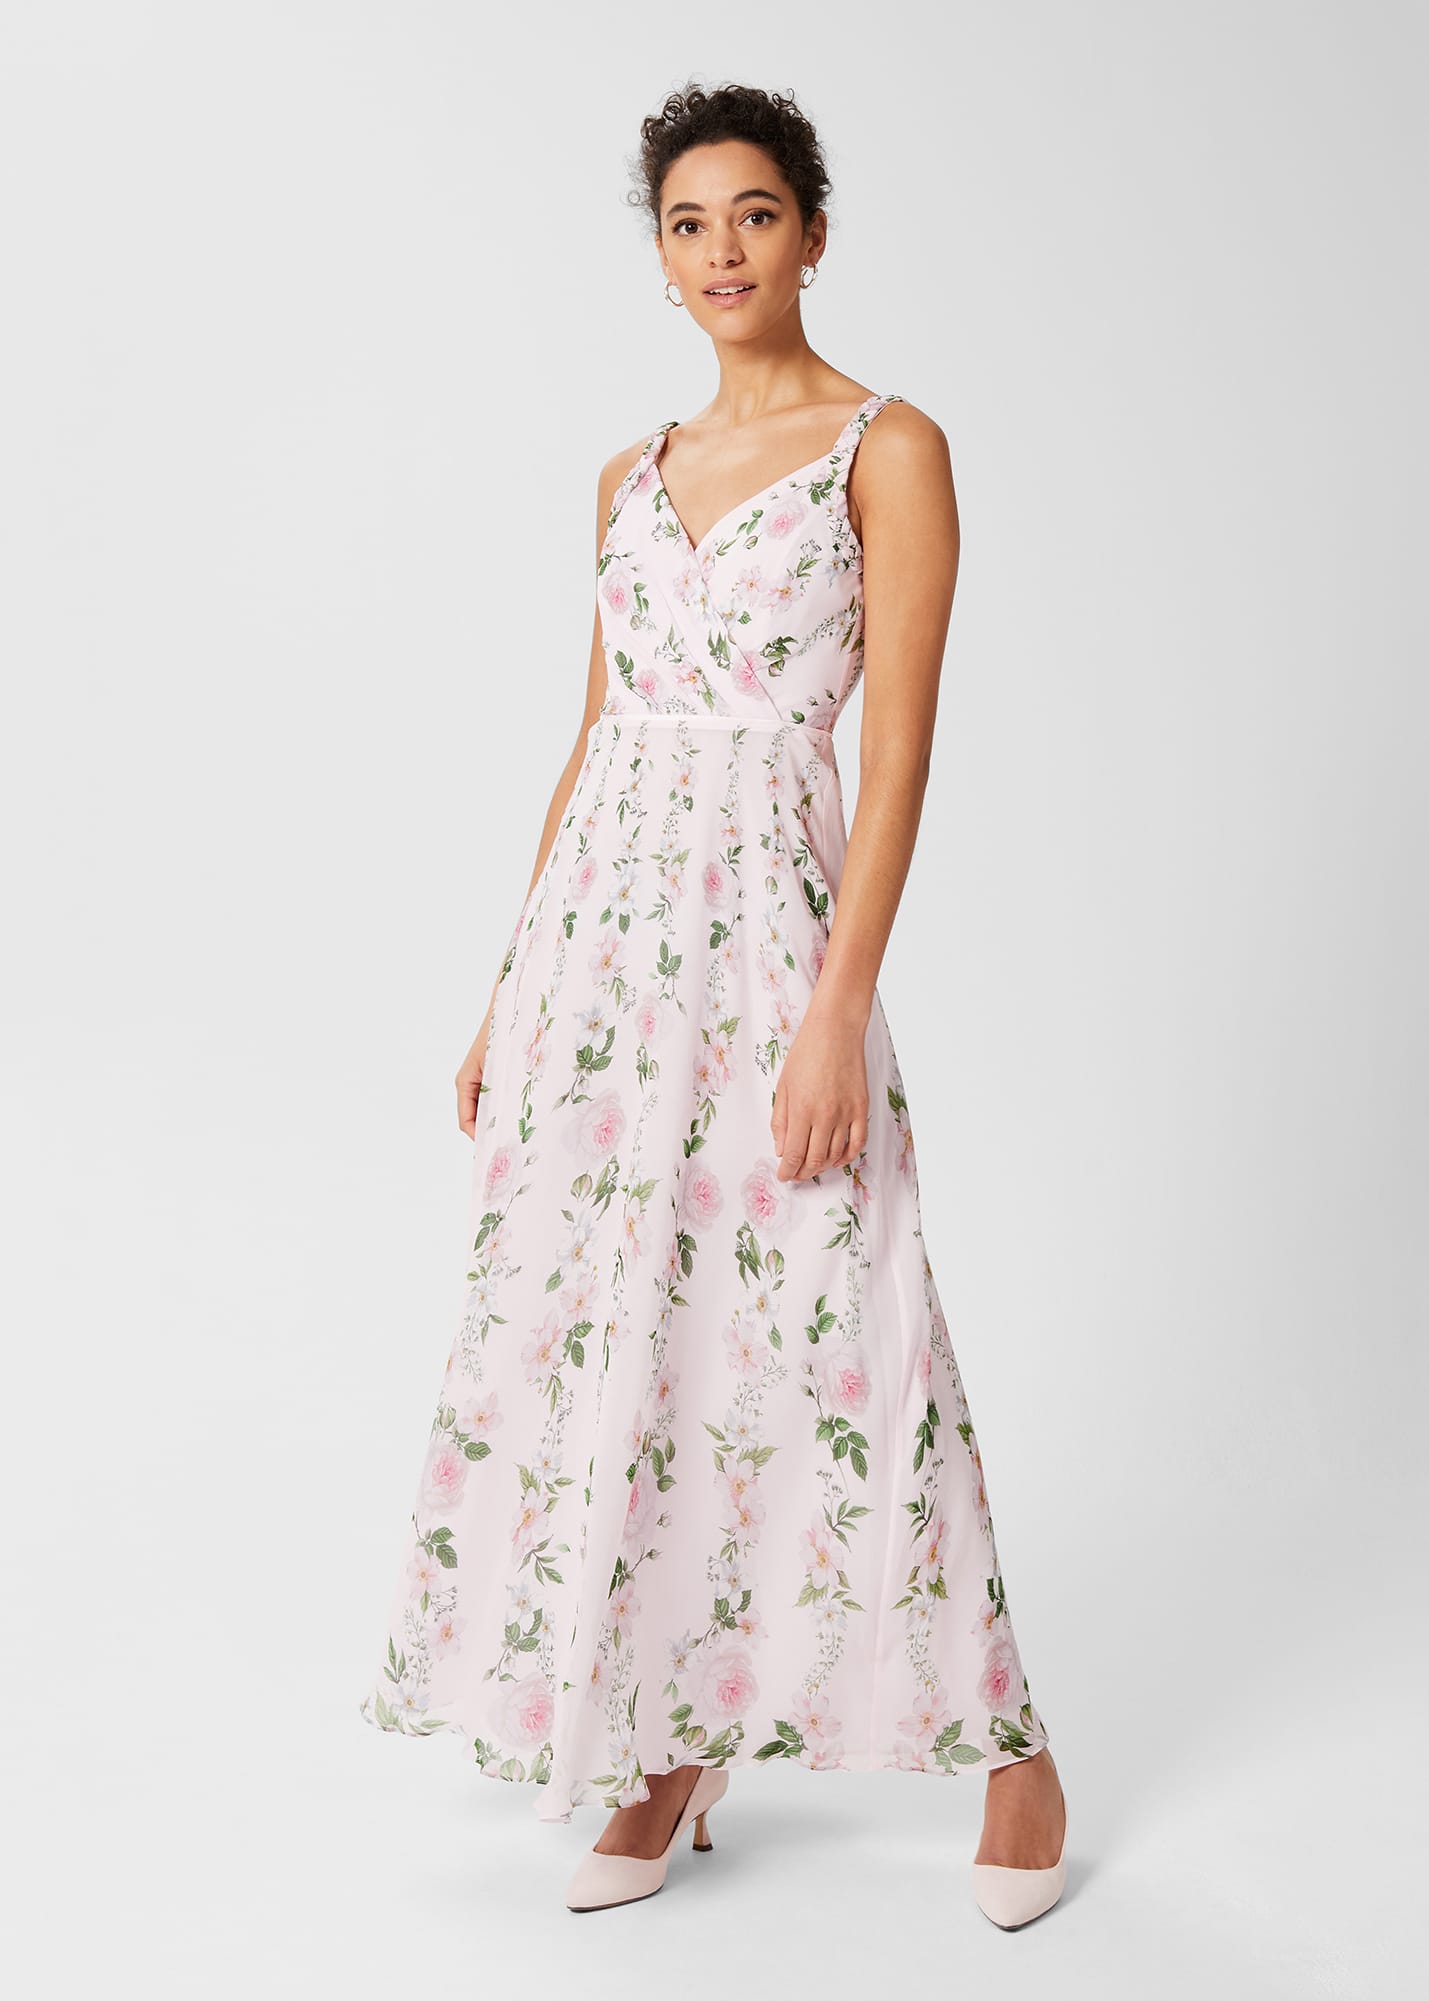 Hobbs Women's Catherine Silk Floral Maxi Dress - Pale Pink Multi